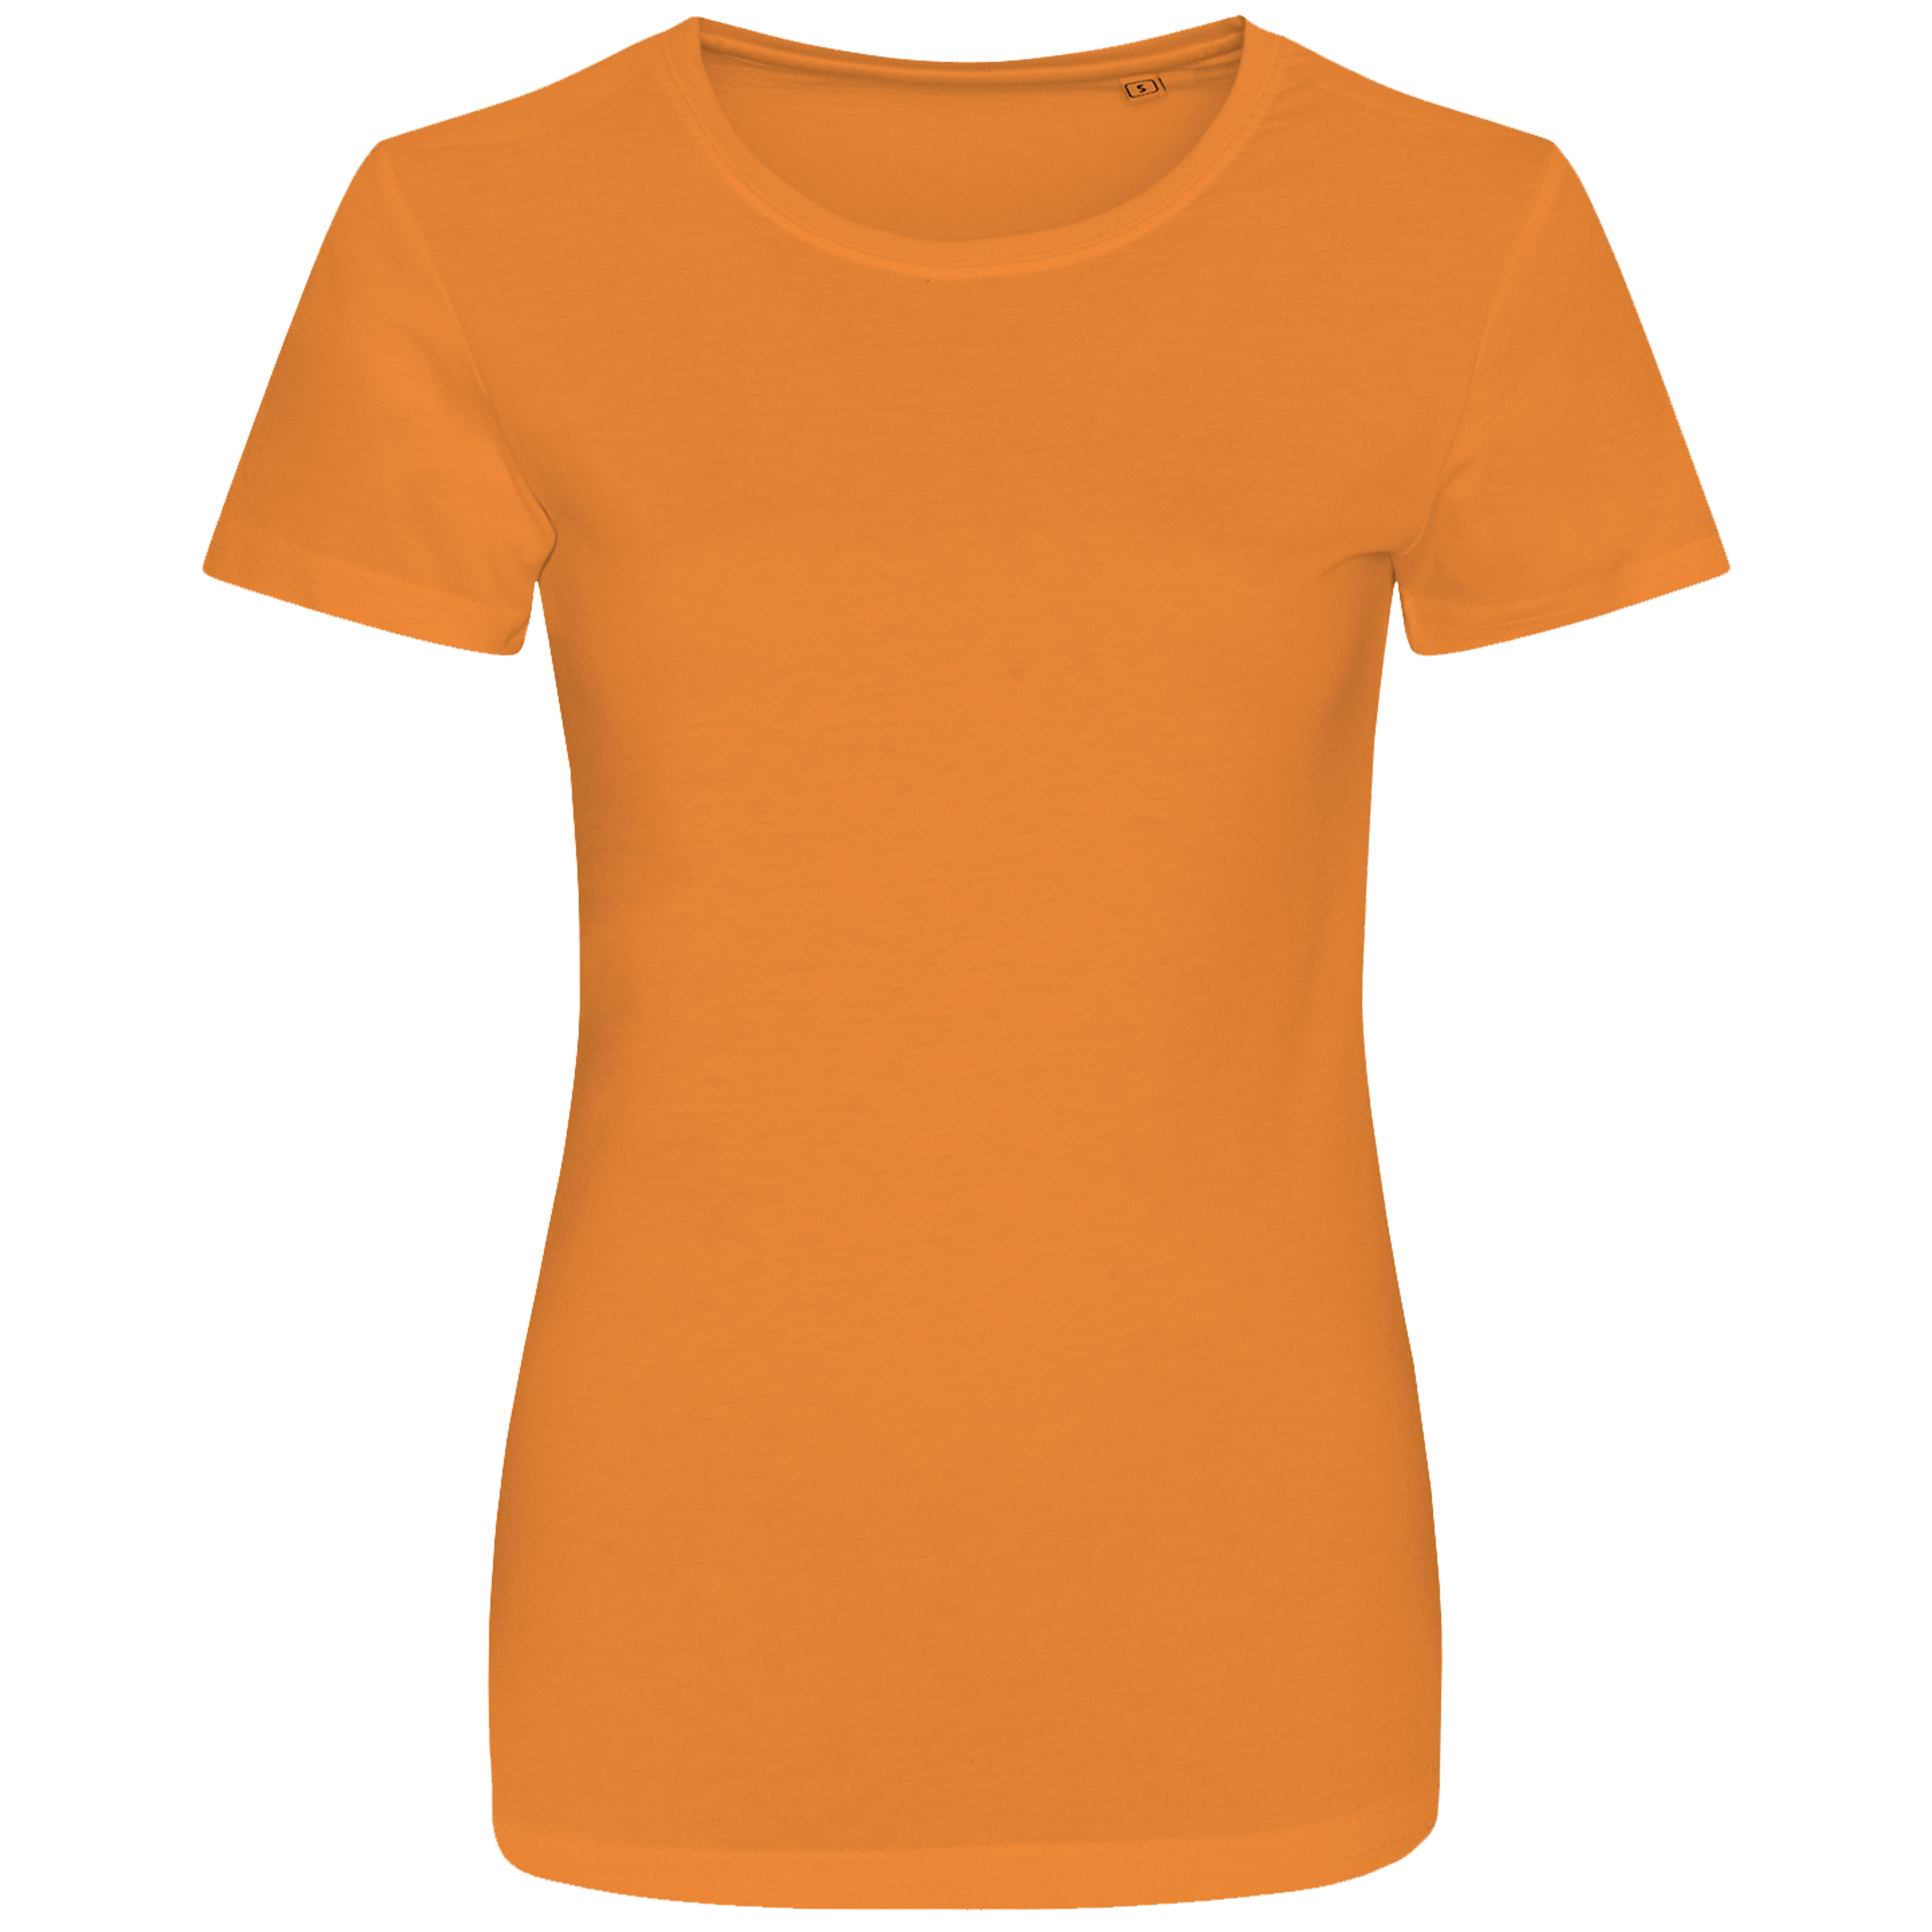 Short sleeve t-shirt orange front